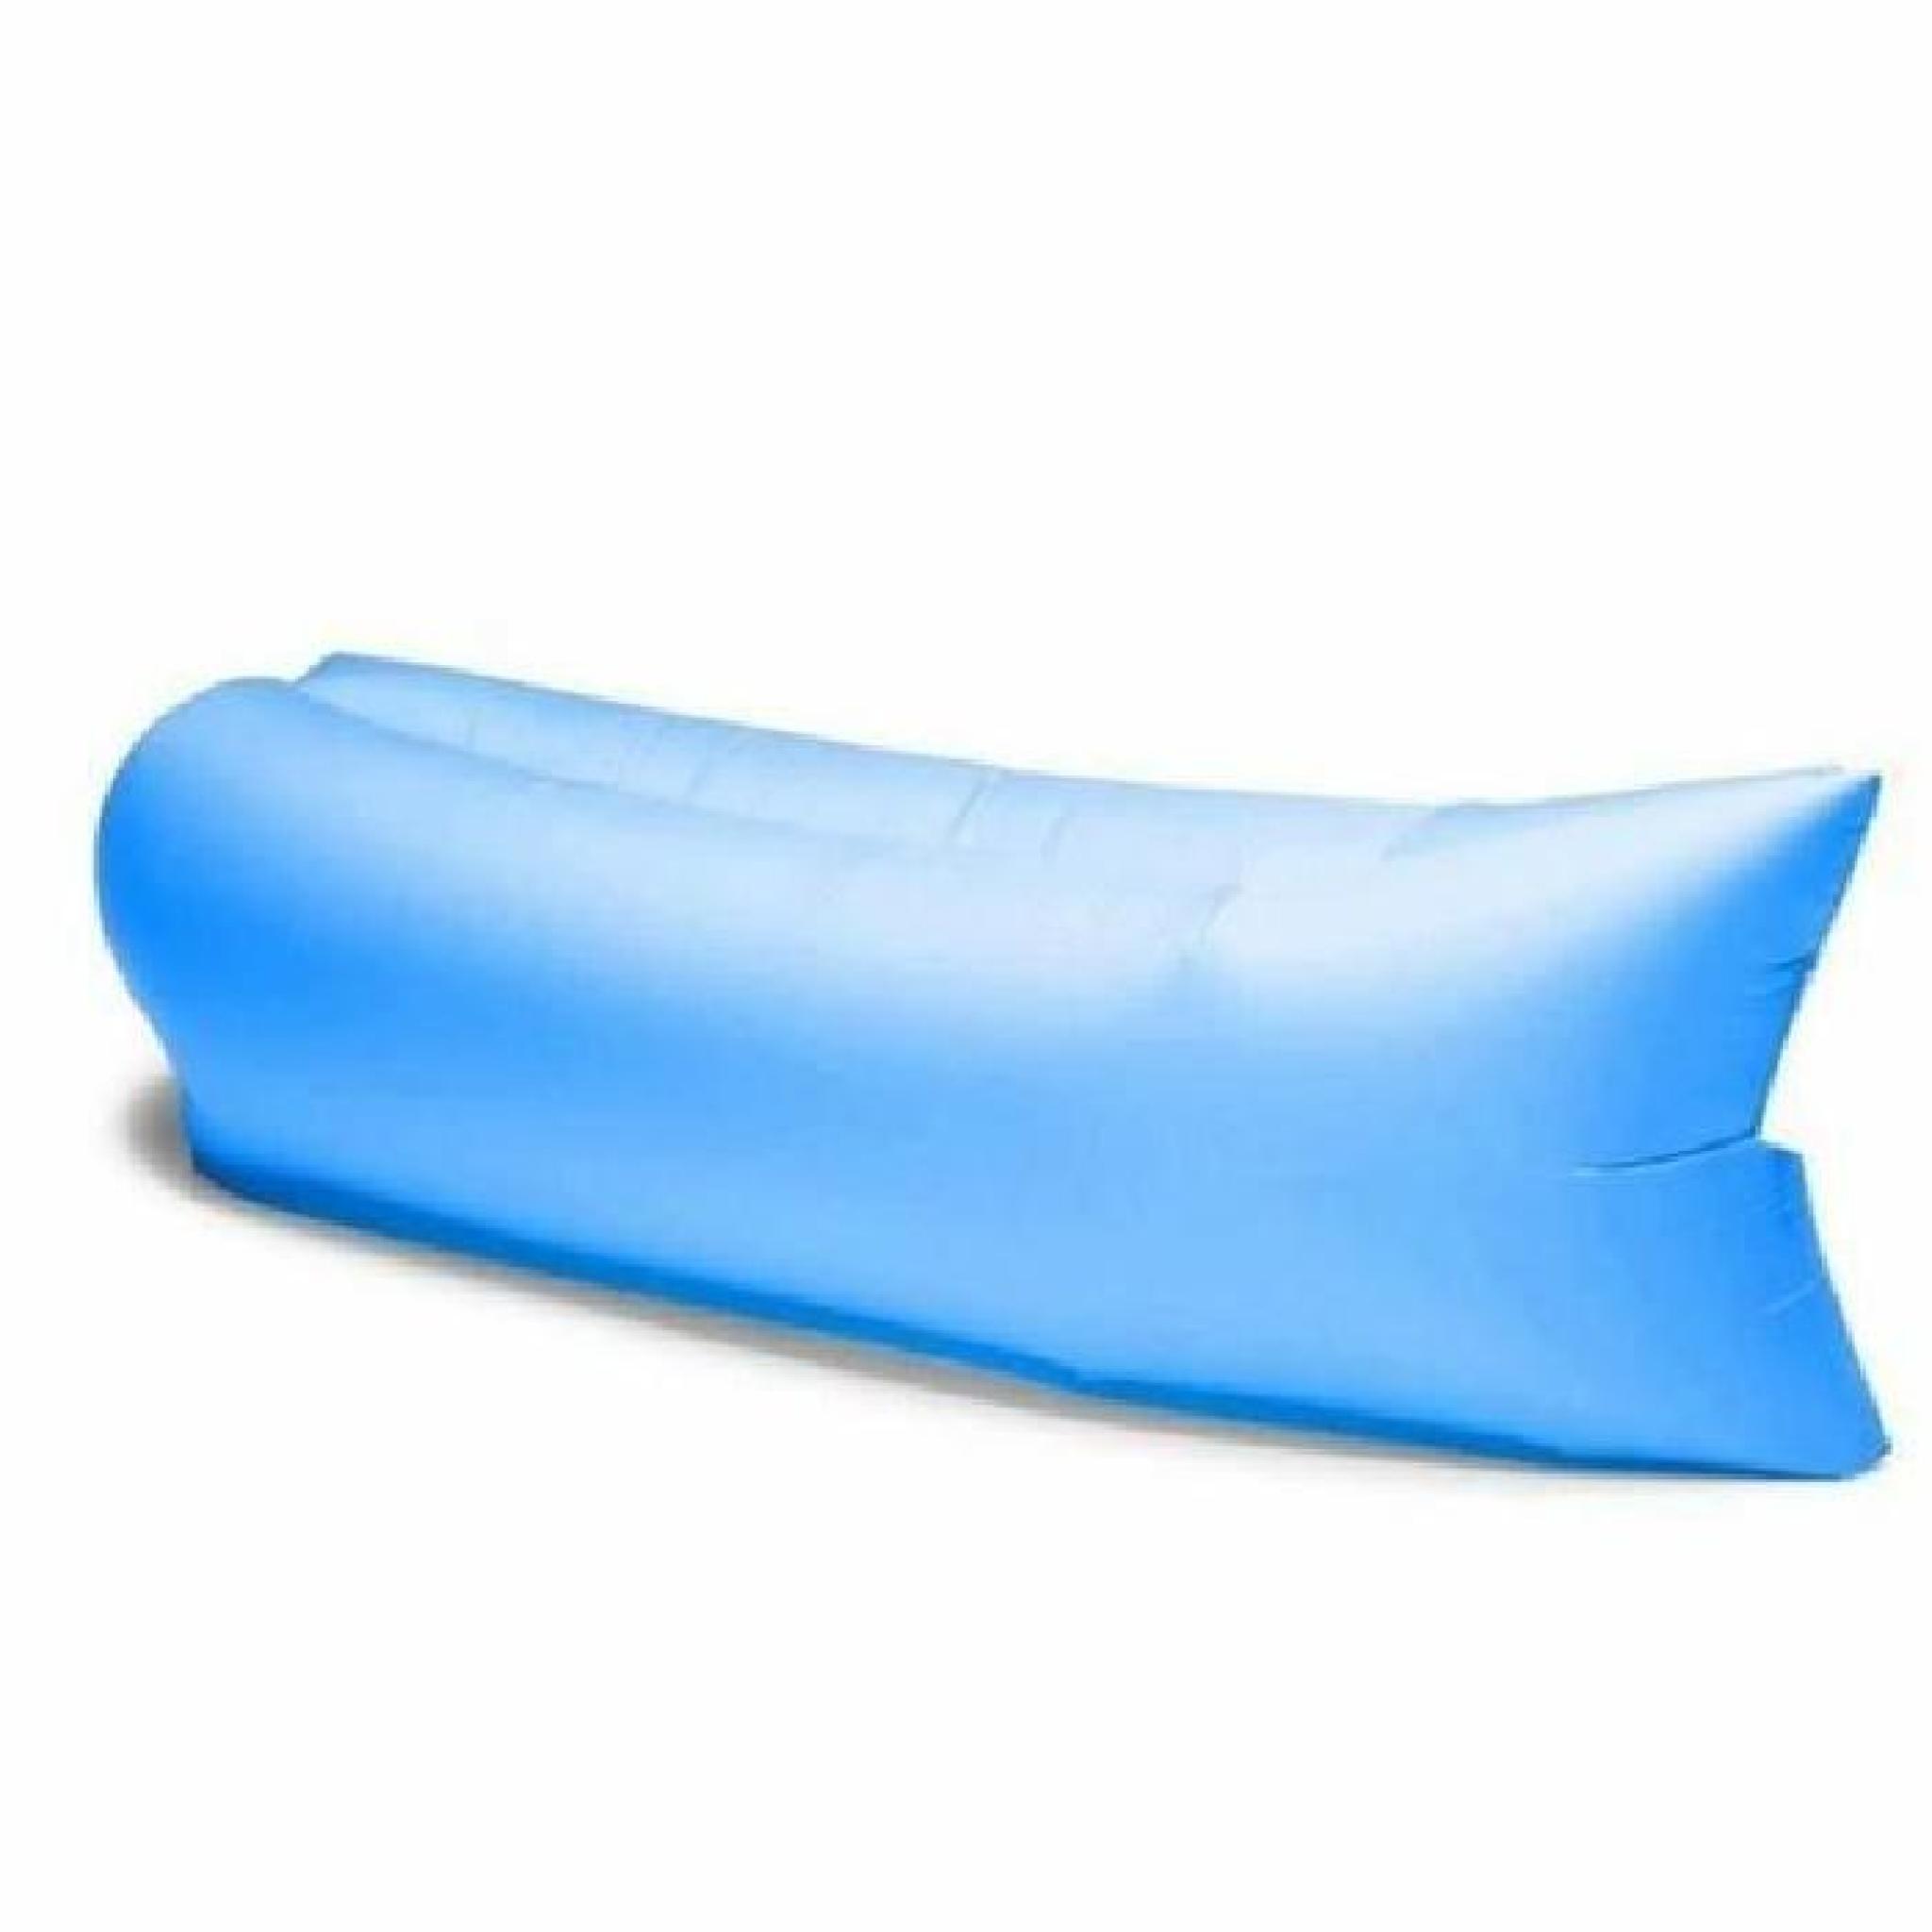 Bleu Portable en plein air gonflable Canapé Sofa gonflable Lounger Air Sac housse pour barbecue Beach Camping pas cher